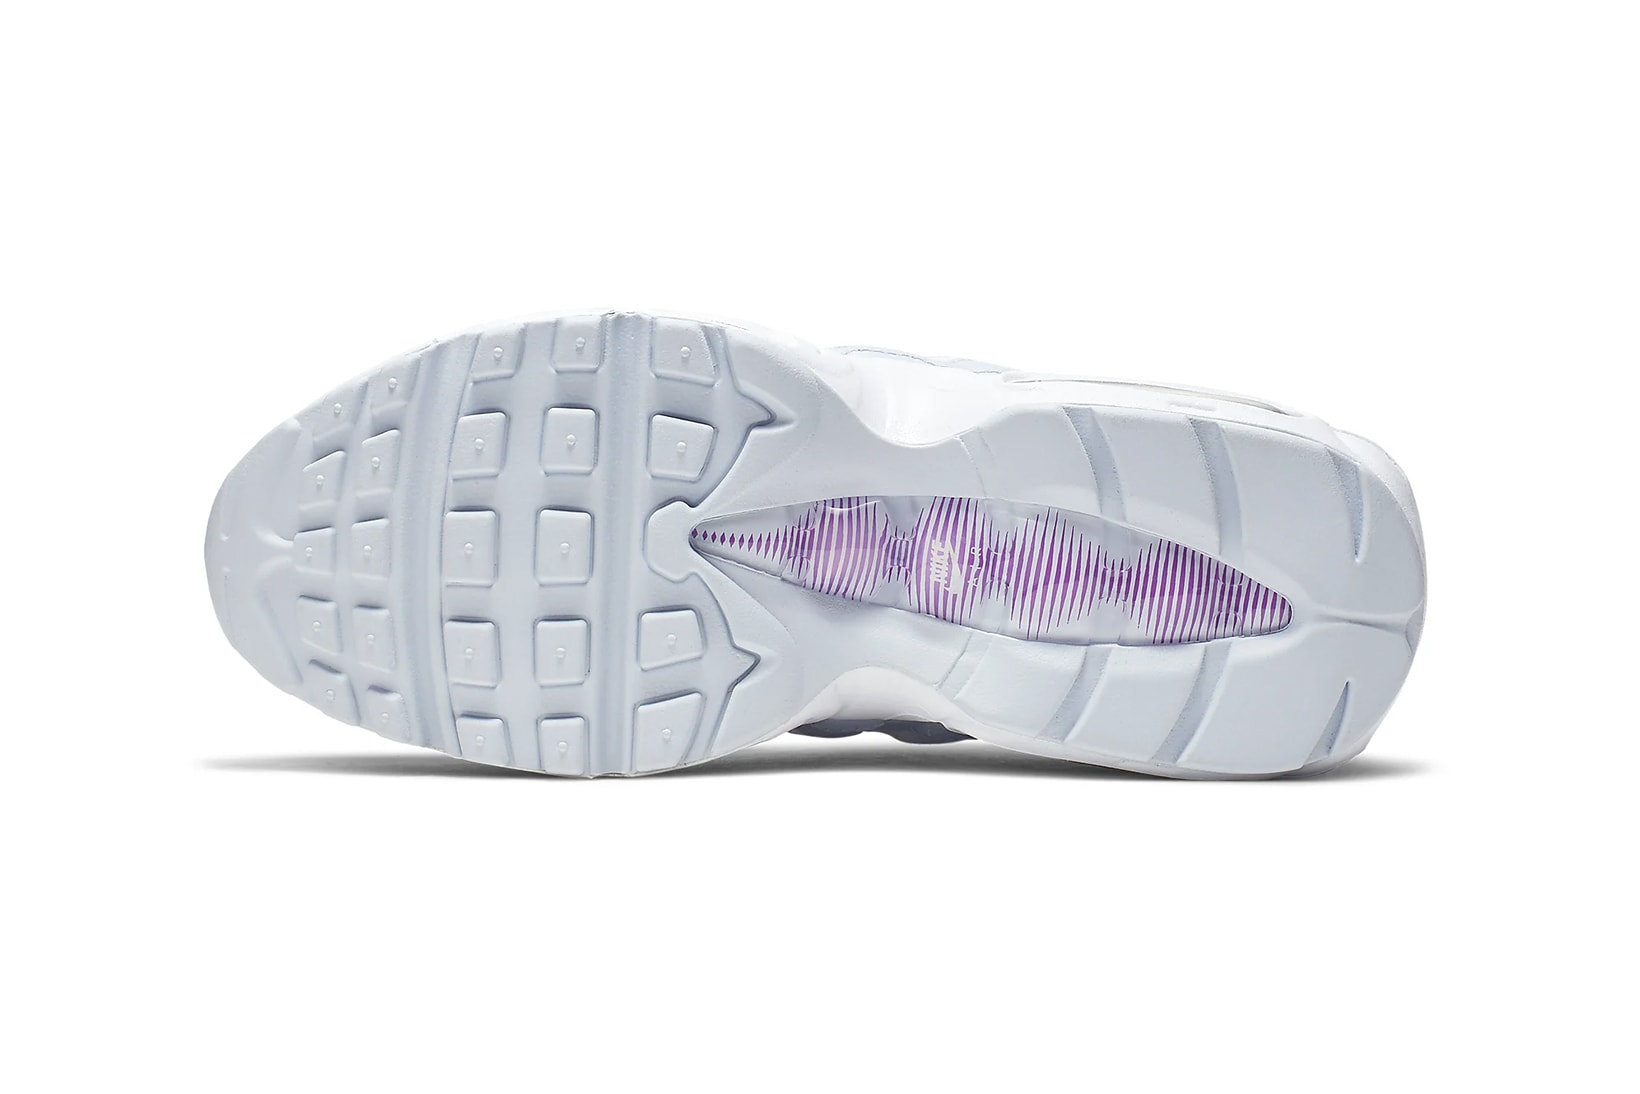 nike air max 95 womens sneakers pastel blue teal purple violet white grey royal pulse hyper violet